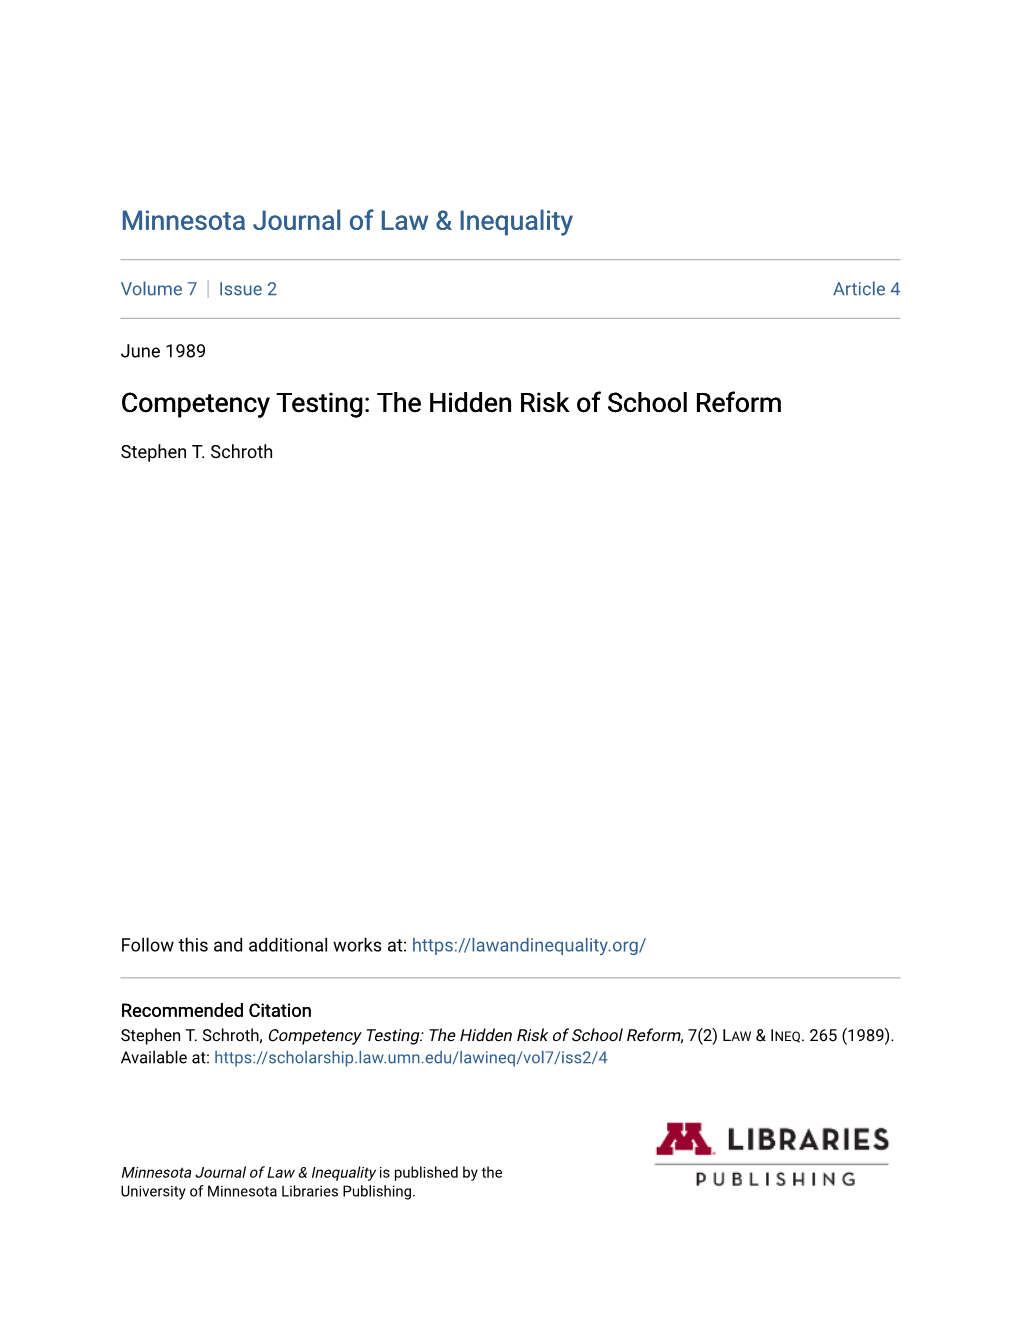 Competency Testing: the Hidden Risk of School Reform